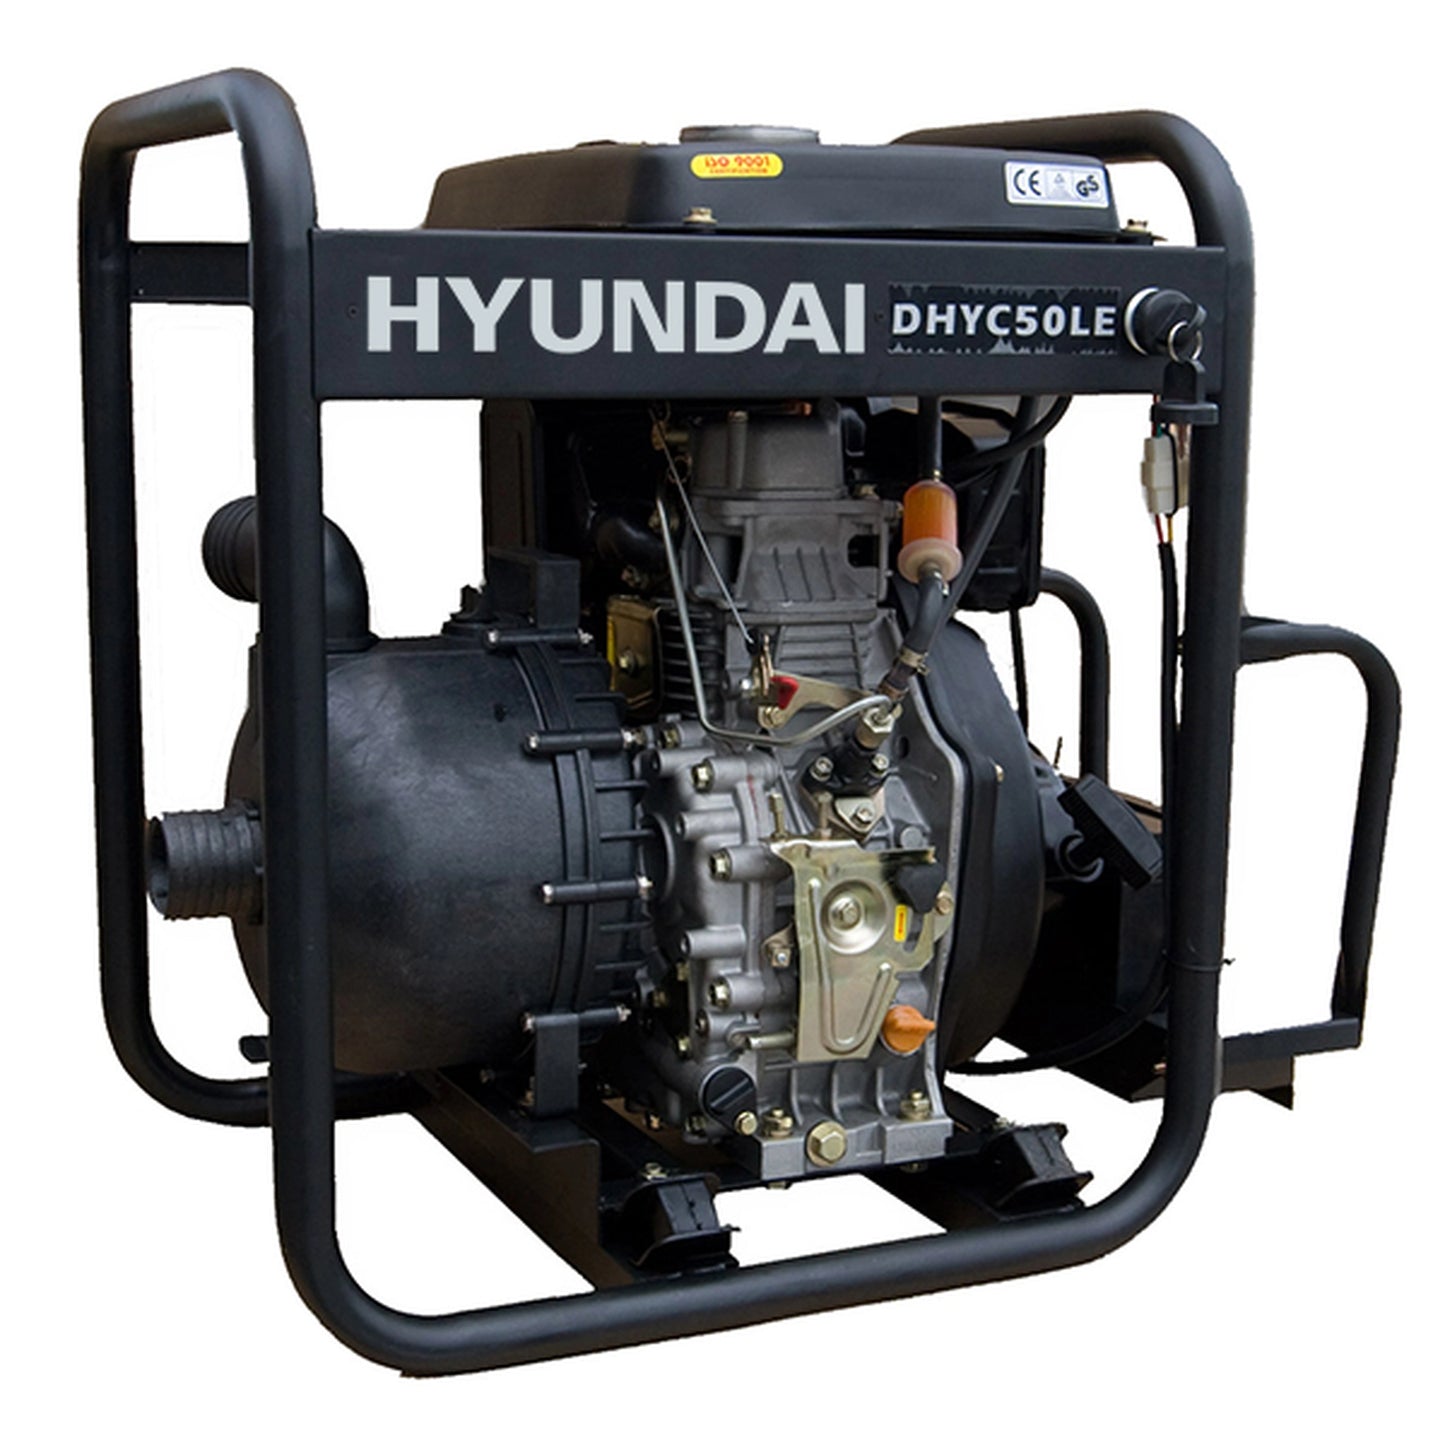 Hyundai DHYC50LE Diesel Chemical Water Pump